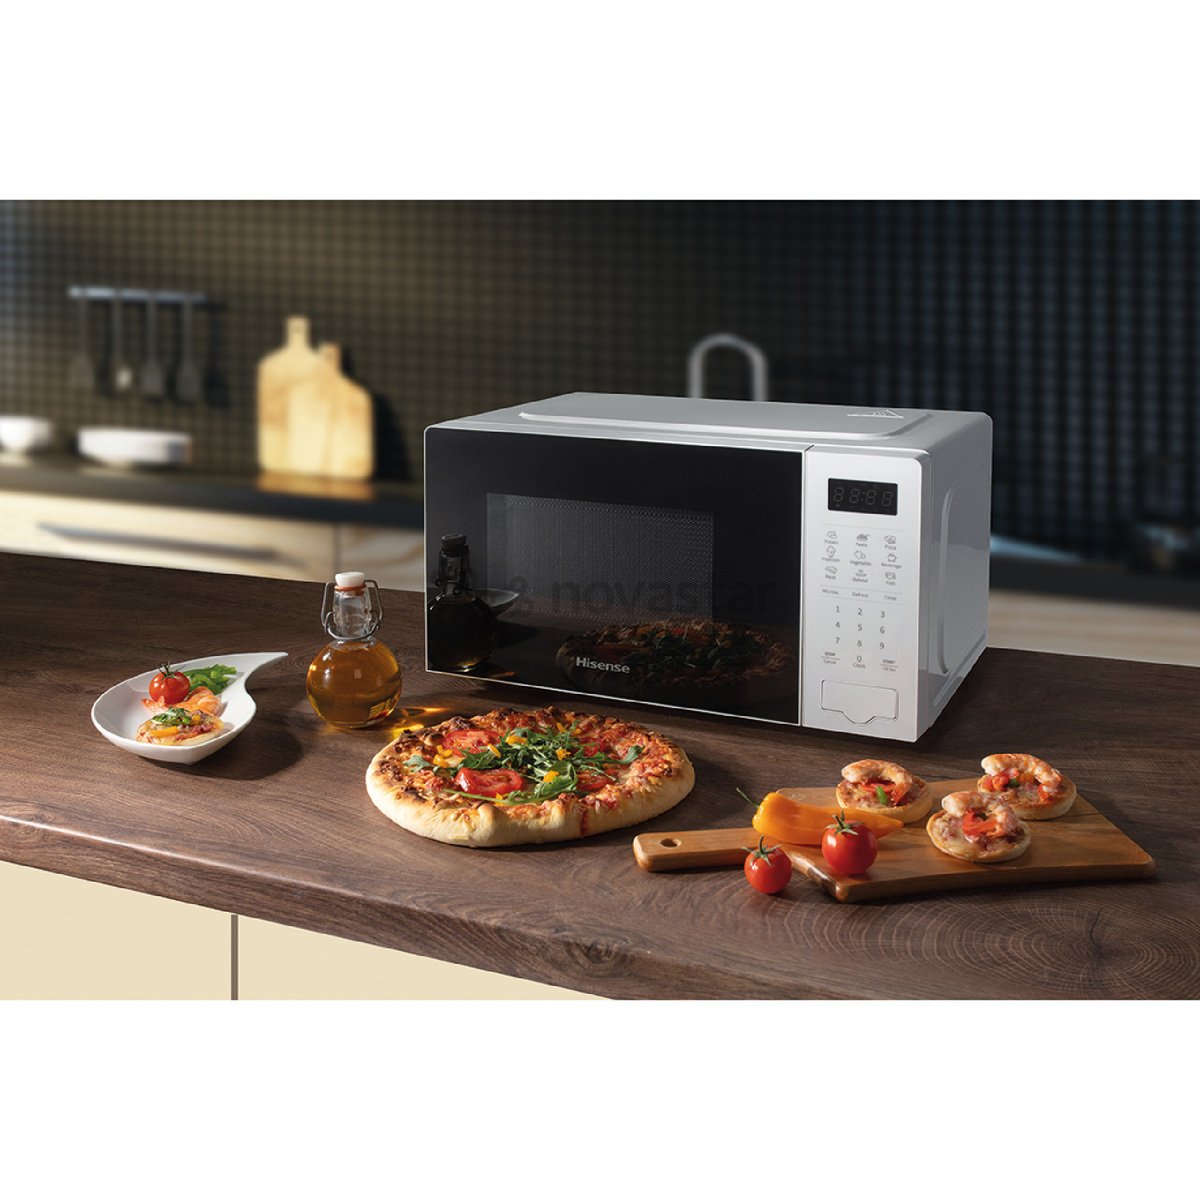 Hisense Microwave oven H20MOWS4 20L